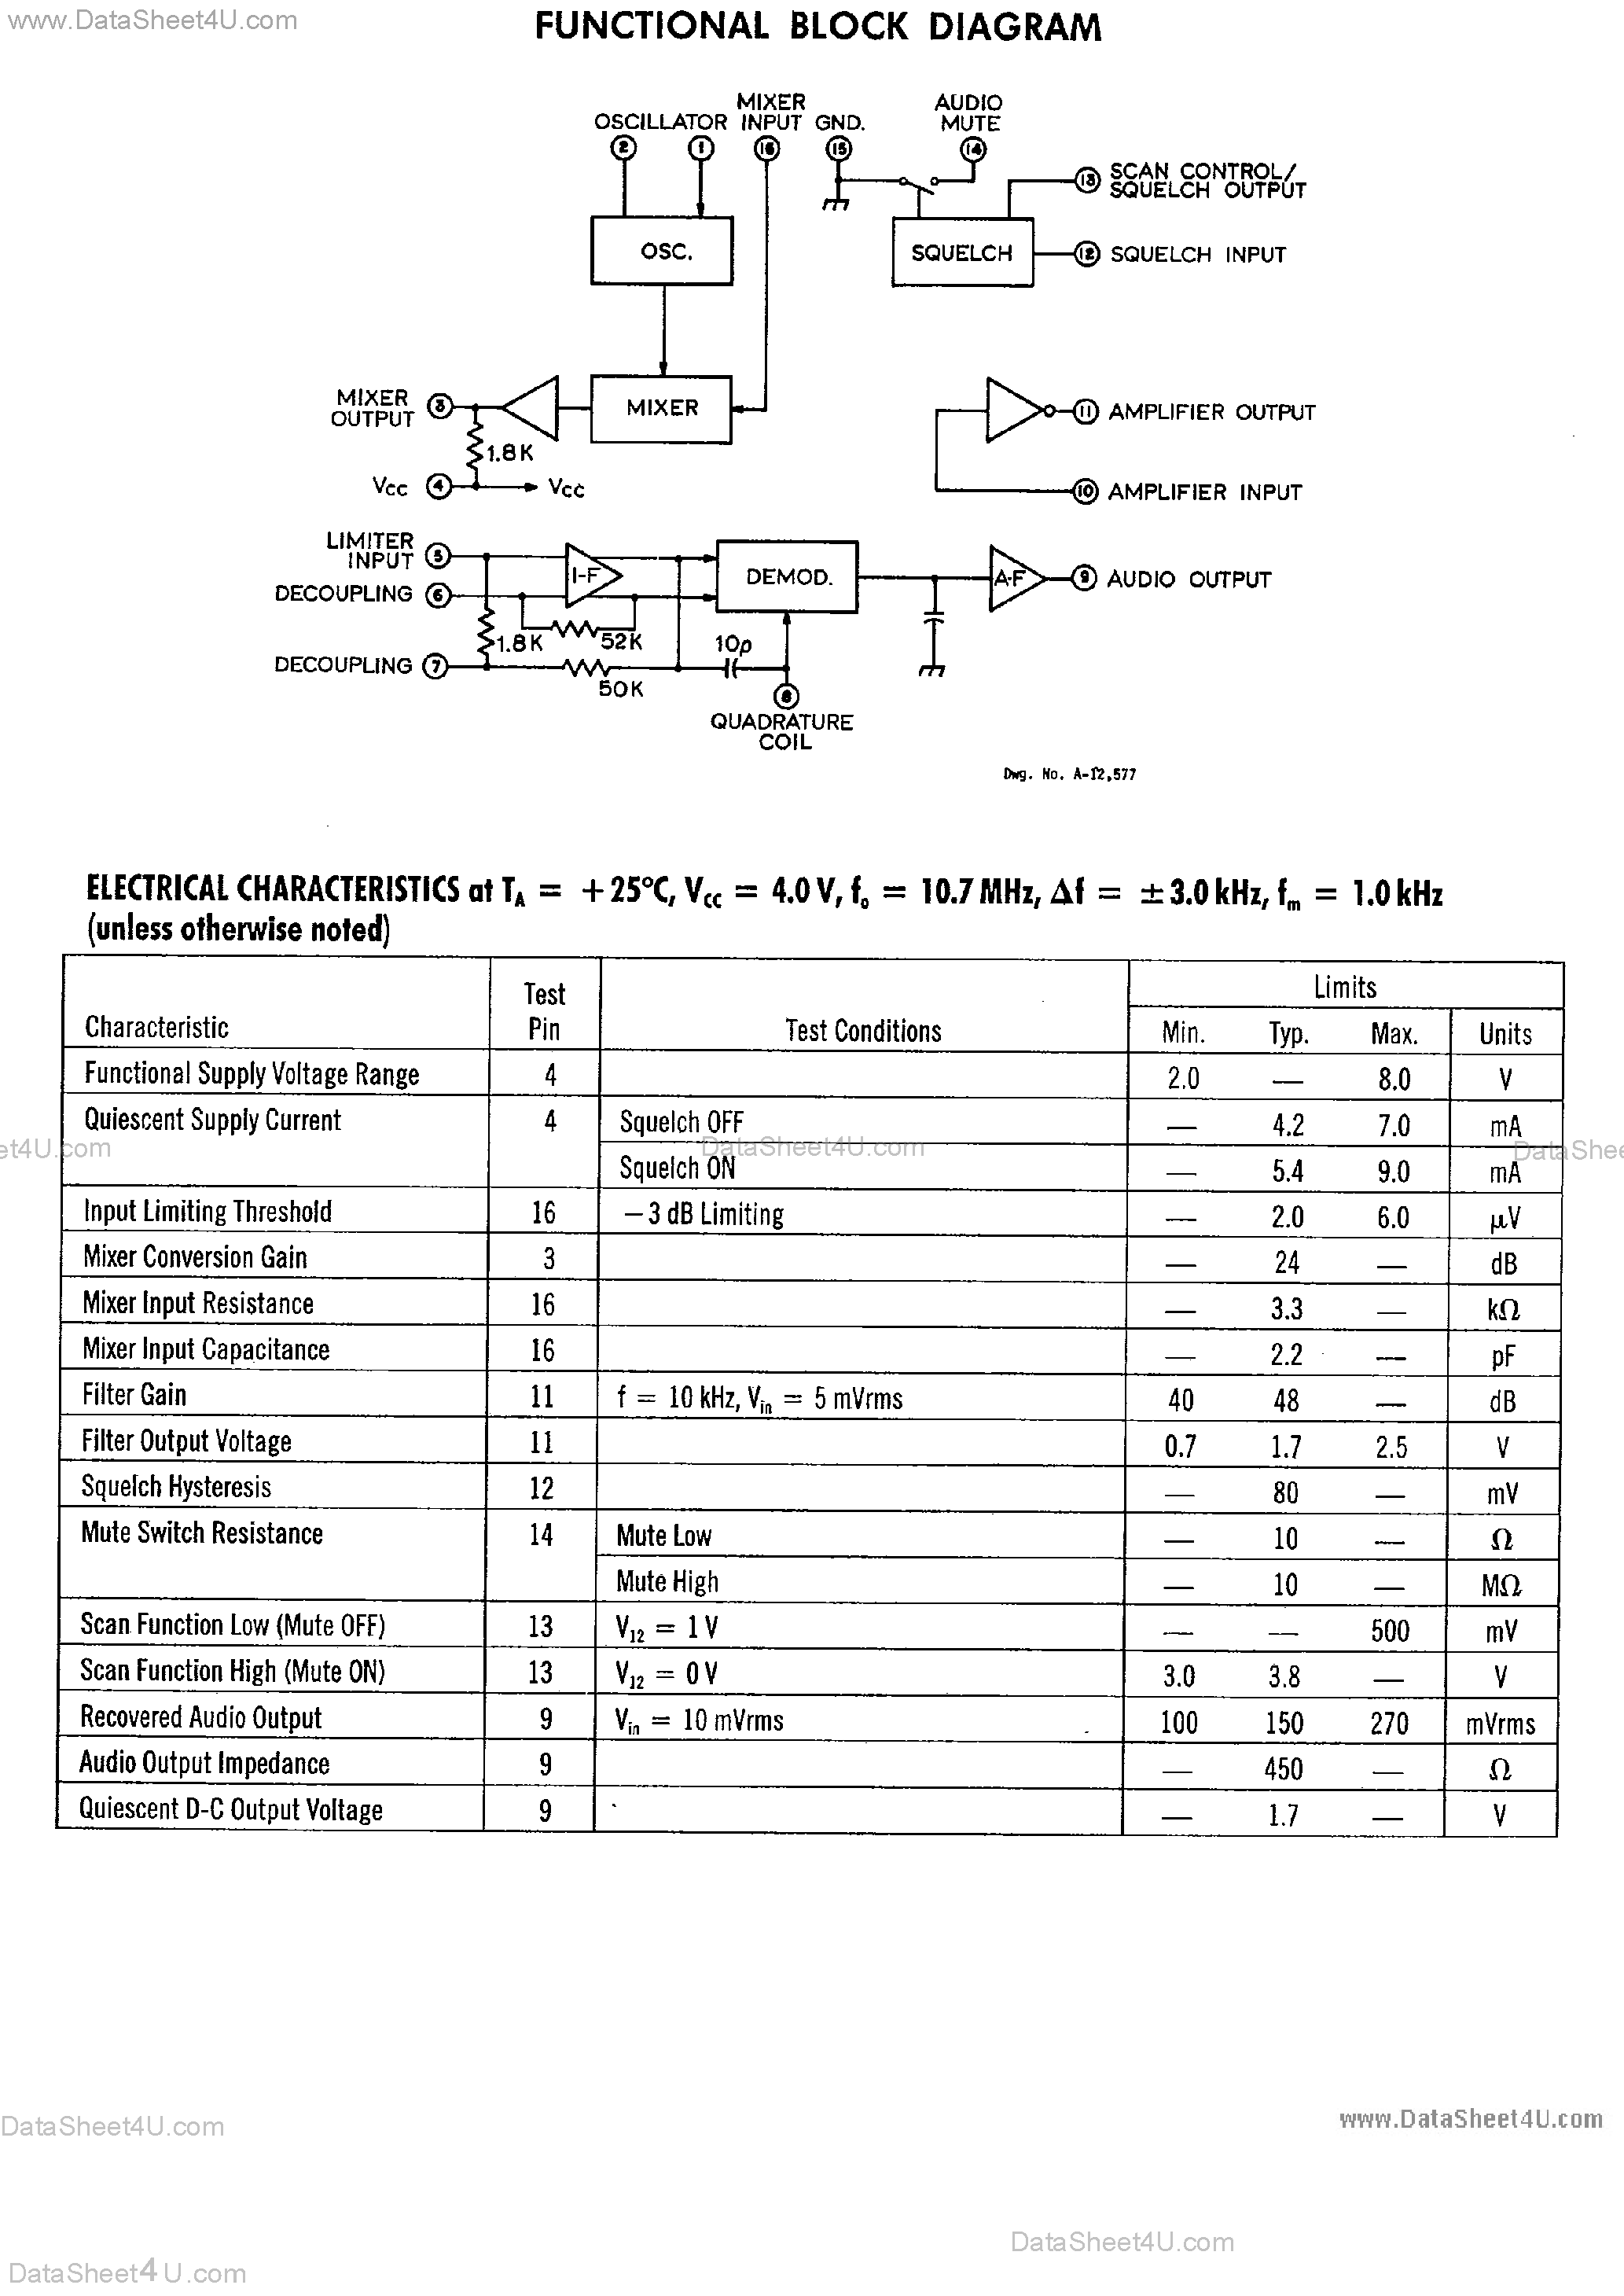 Даташит ULN-3862A - Low Power FM IF System страница 2